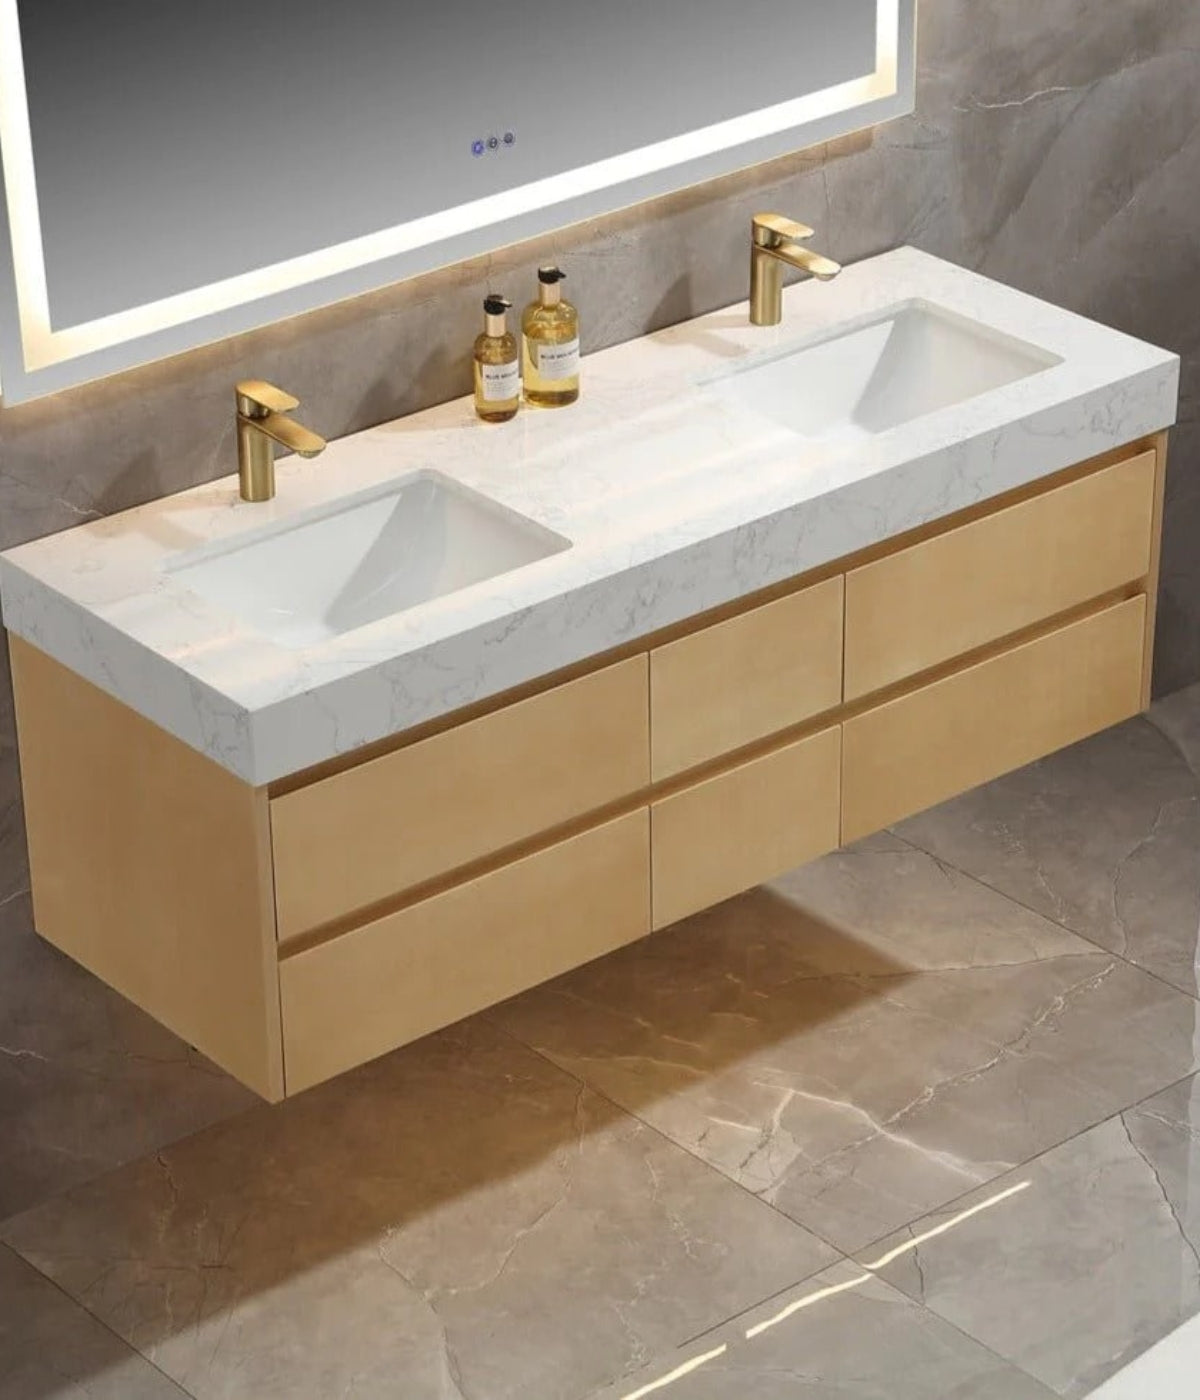 This beautiful bathroom wood vanity is the Sleek 60 inch by ExbriteUSA